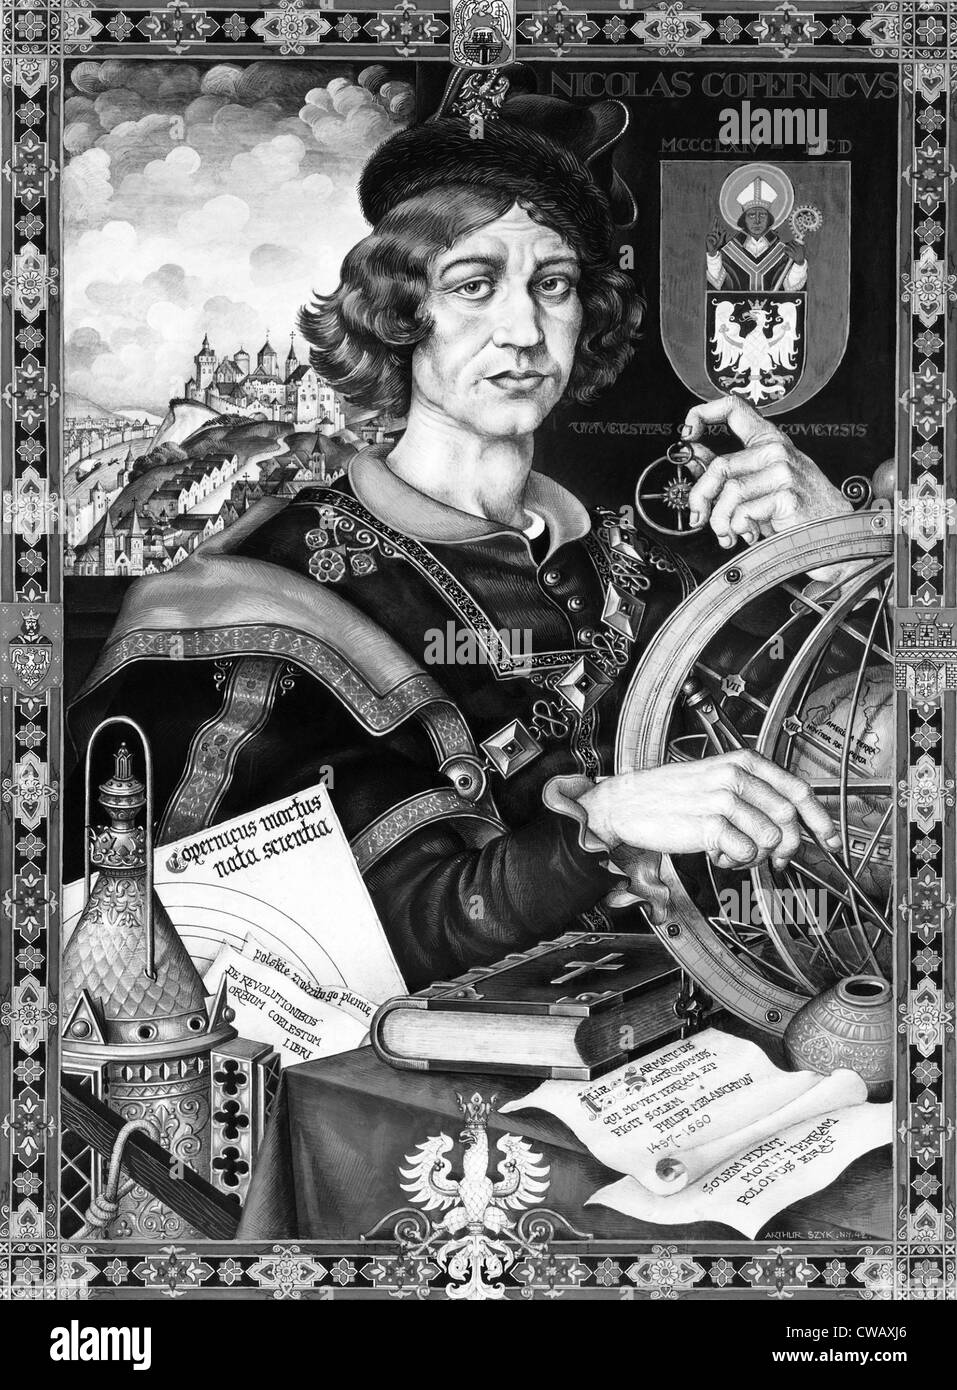 EV1823 - polnische Astronom Nicholas Copernicus 1543 AD. Höflichkeit: CSU Archive / Everett Collection Stockfoto